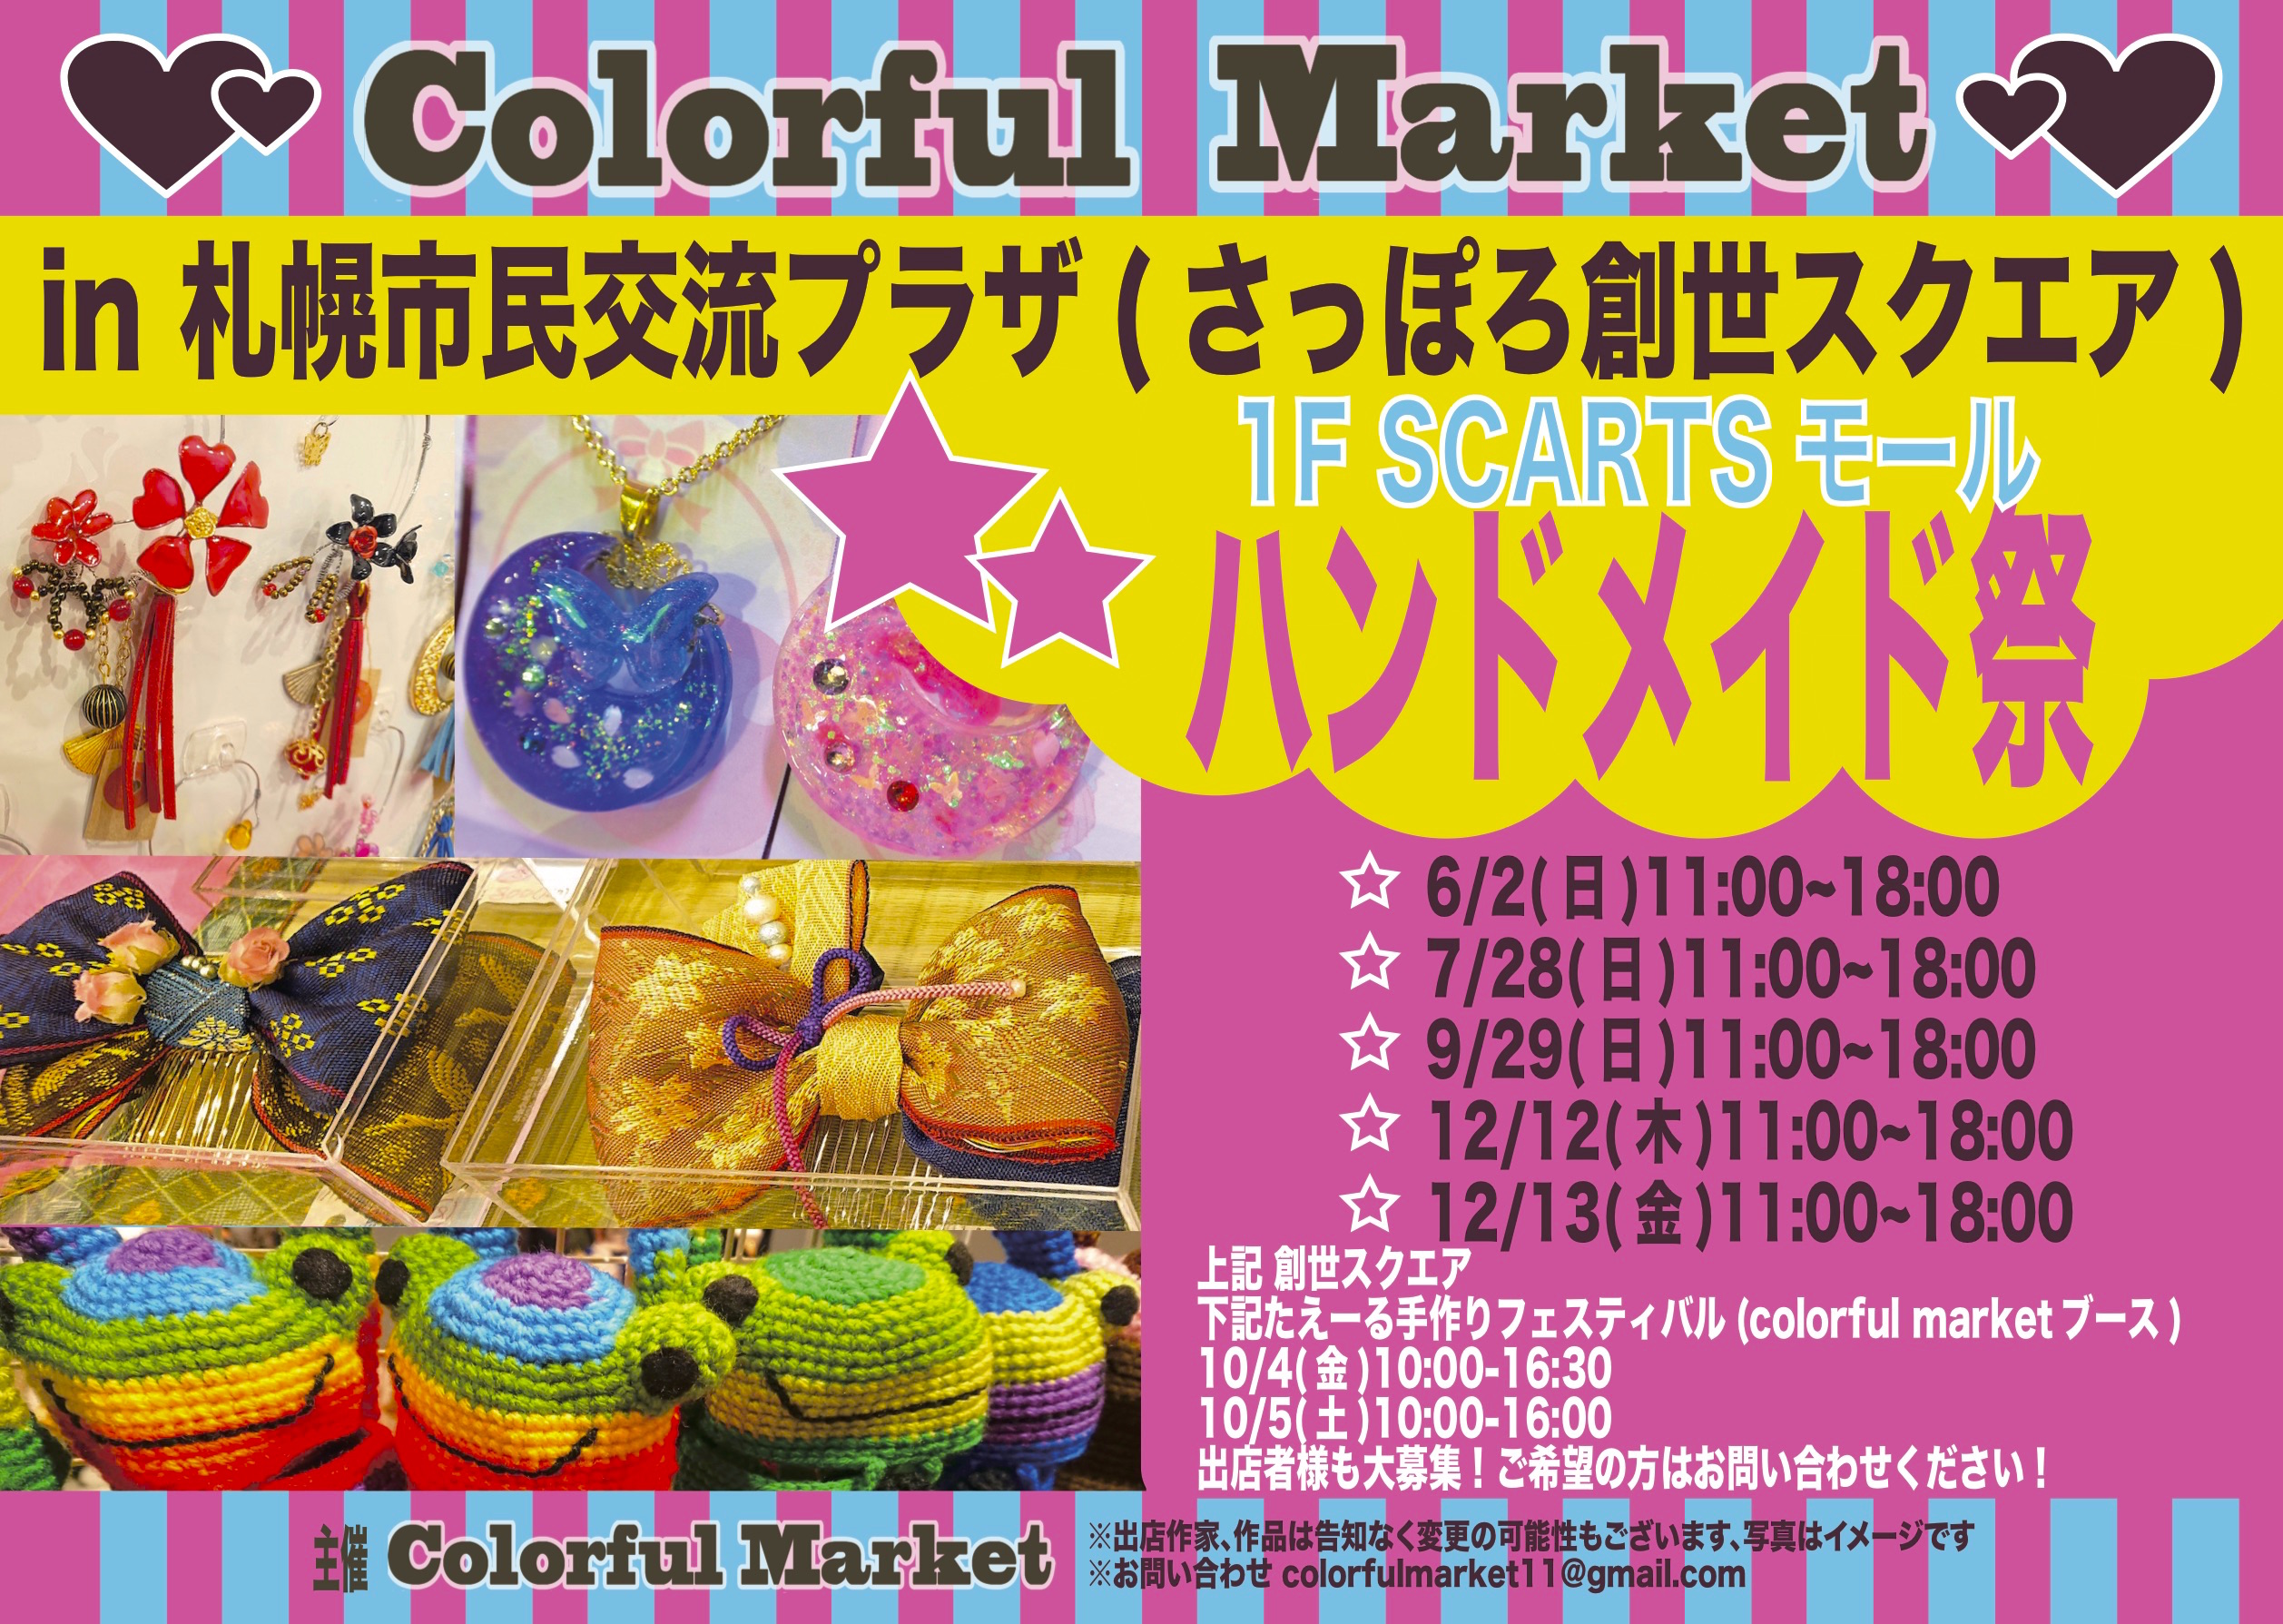 Colorful Market ハンドメイドフェスティバル イベント情報 札幌市民交流プラザ